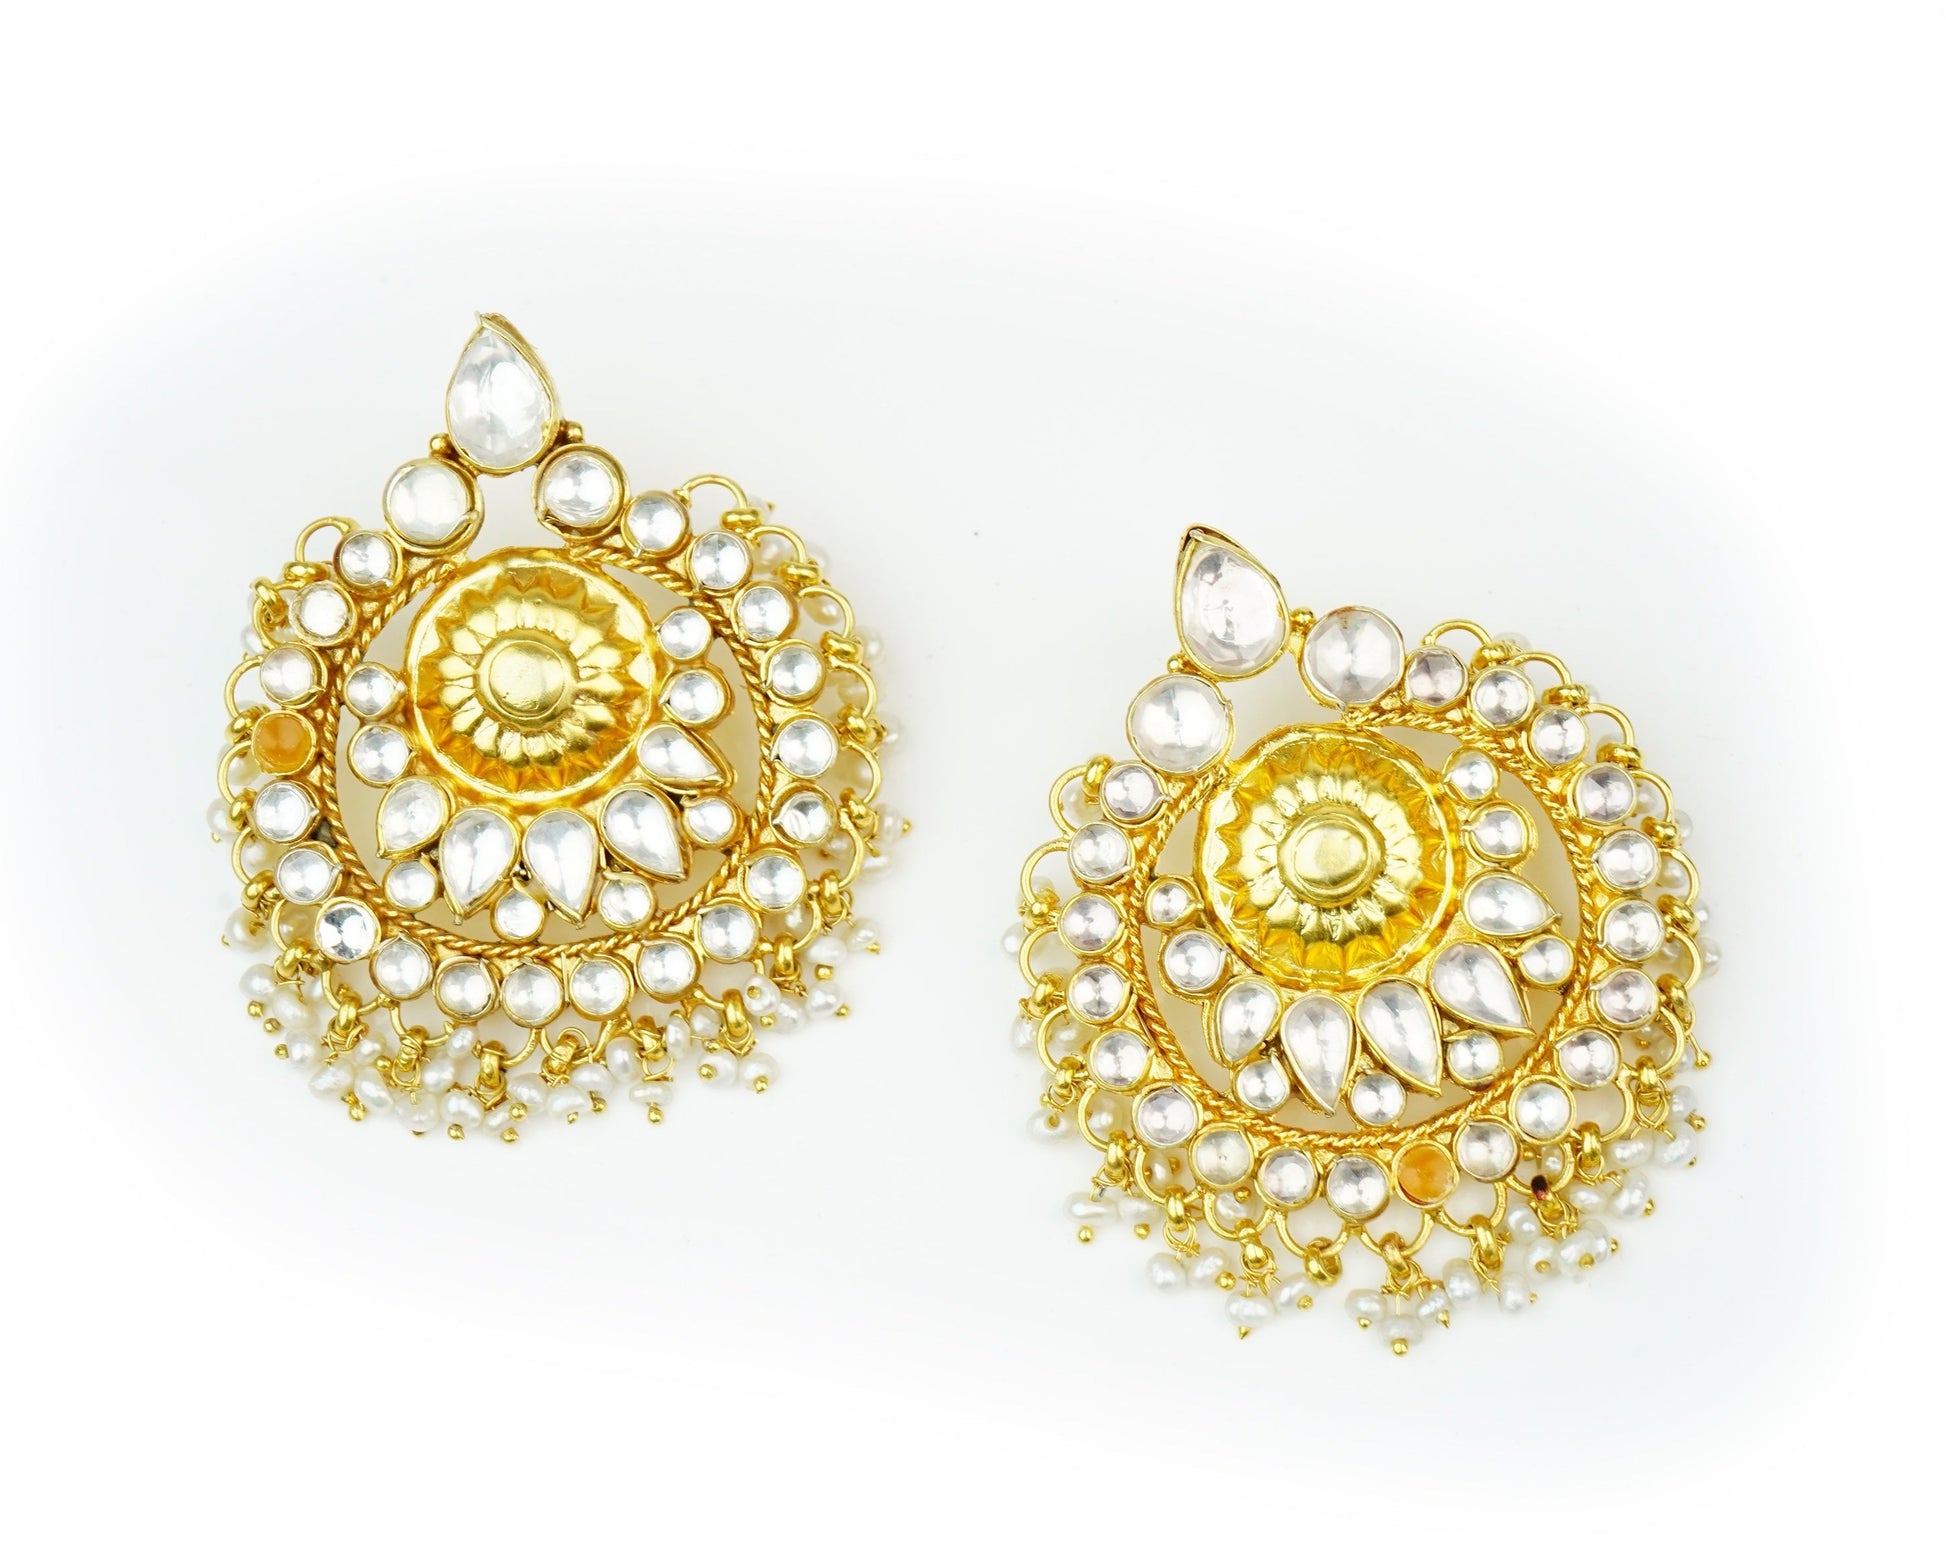 Silver Gold Plated Statement Chandbalis with Kundan and Pearls - Neeta Boochra Jewellery